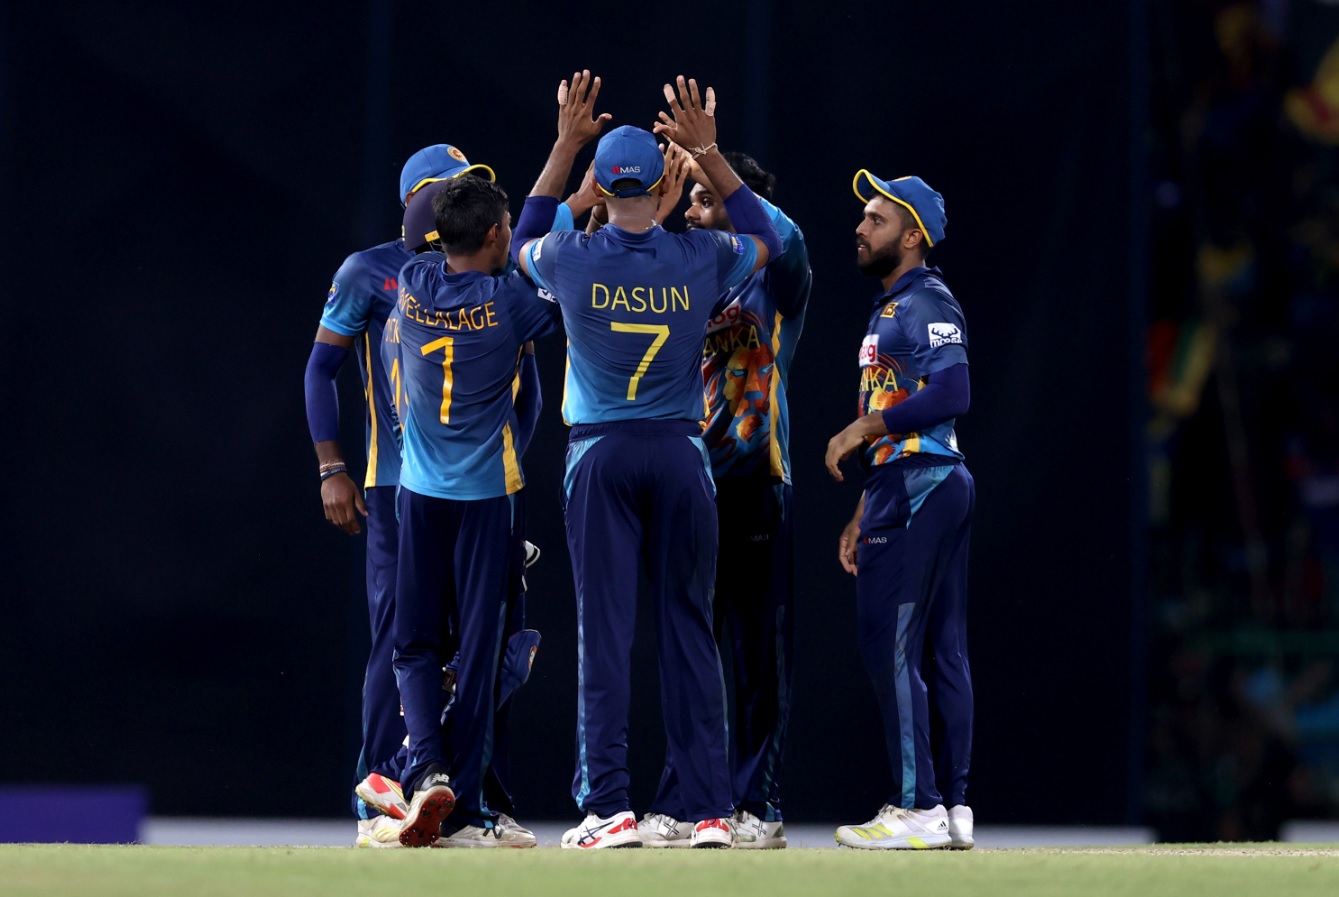 SL vs AUS 2022 | Sri Lanka win 4th ODI, secure first series victory versus Australia in 30 years